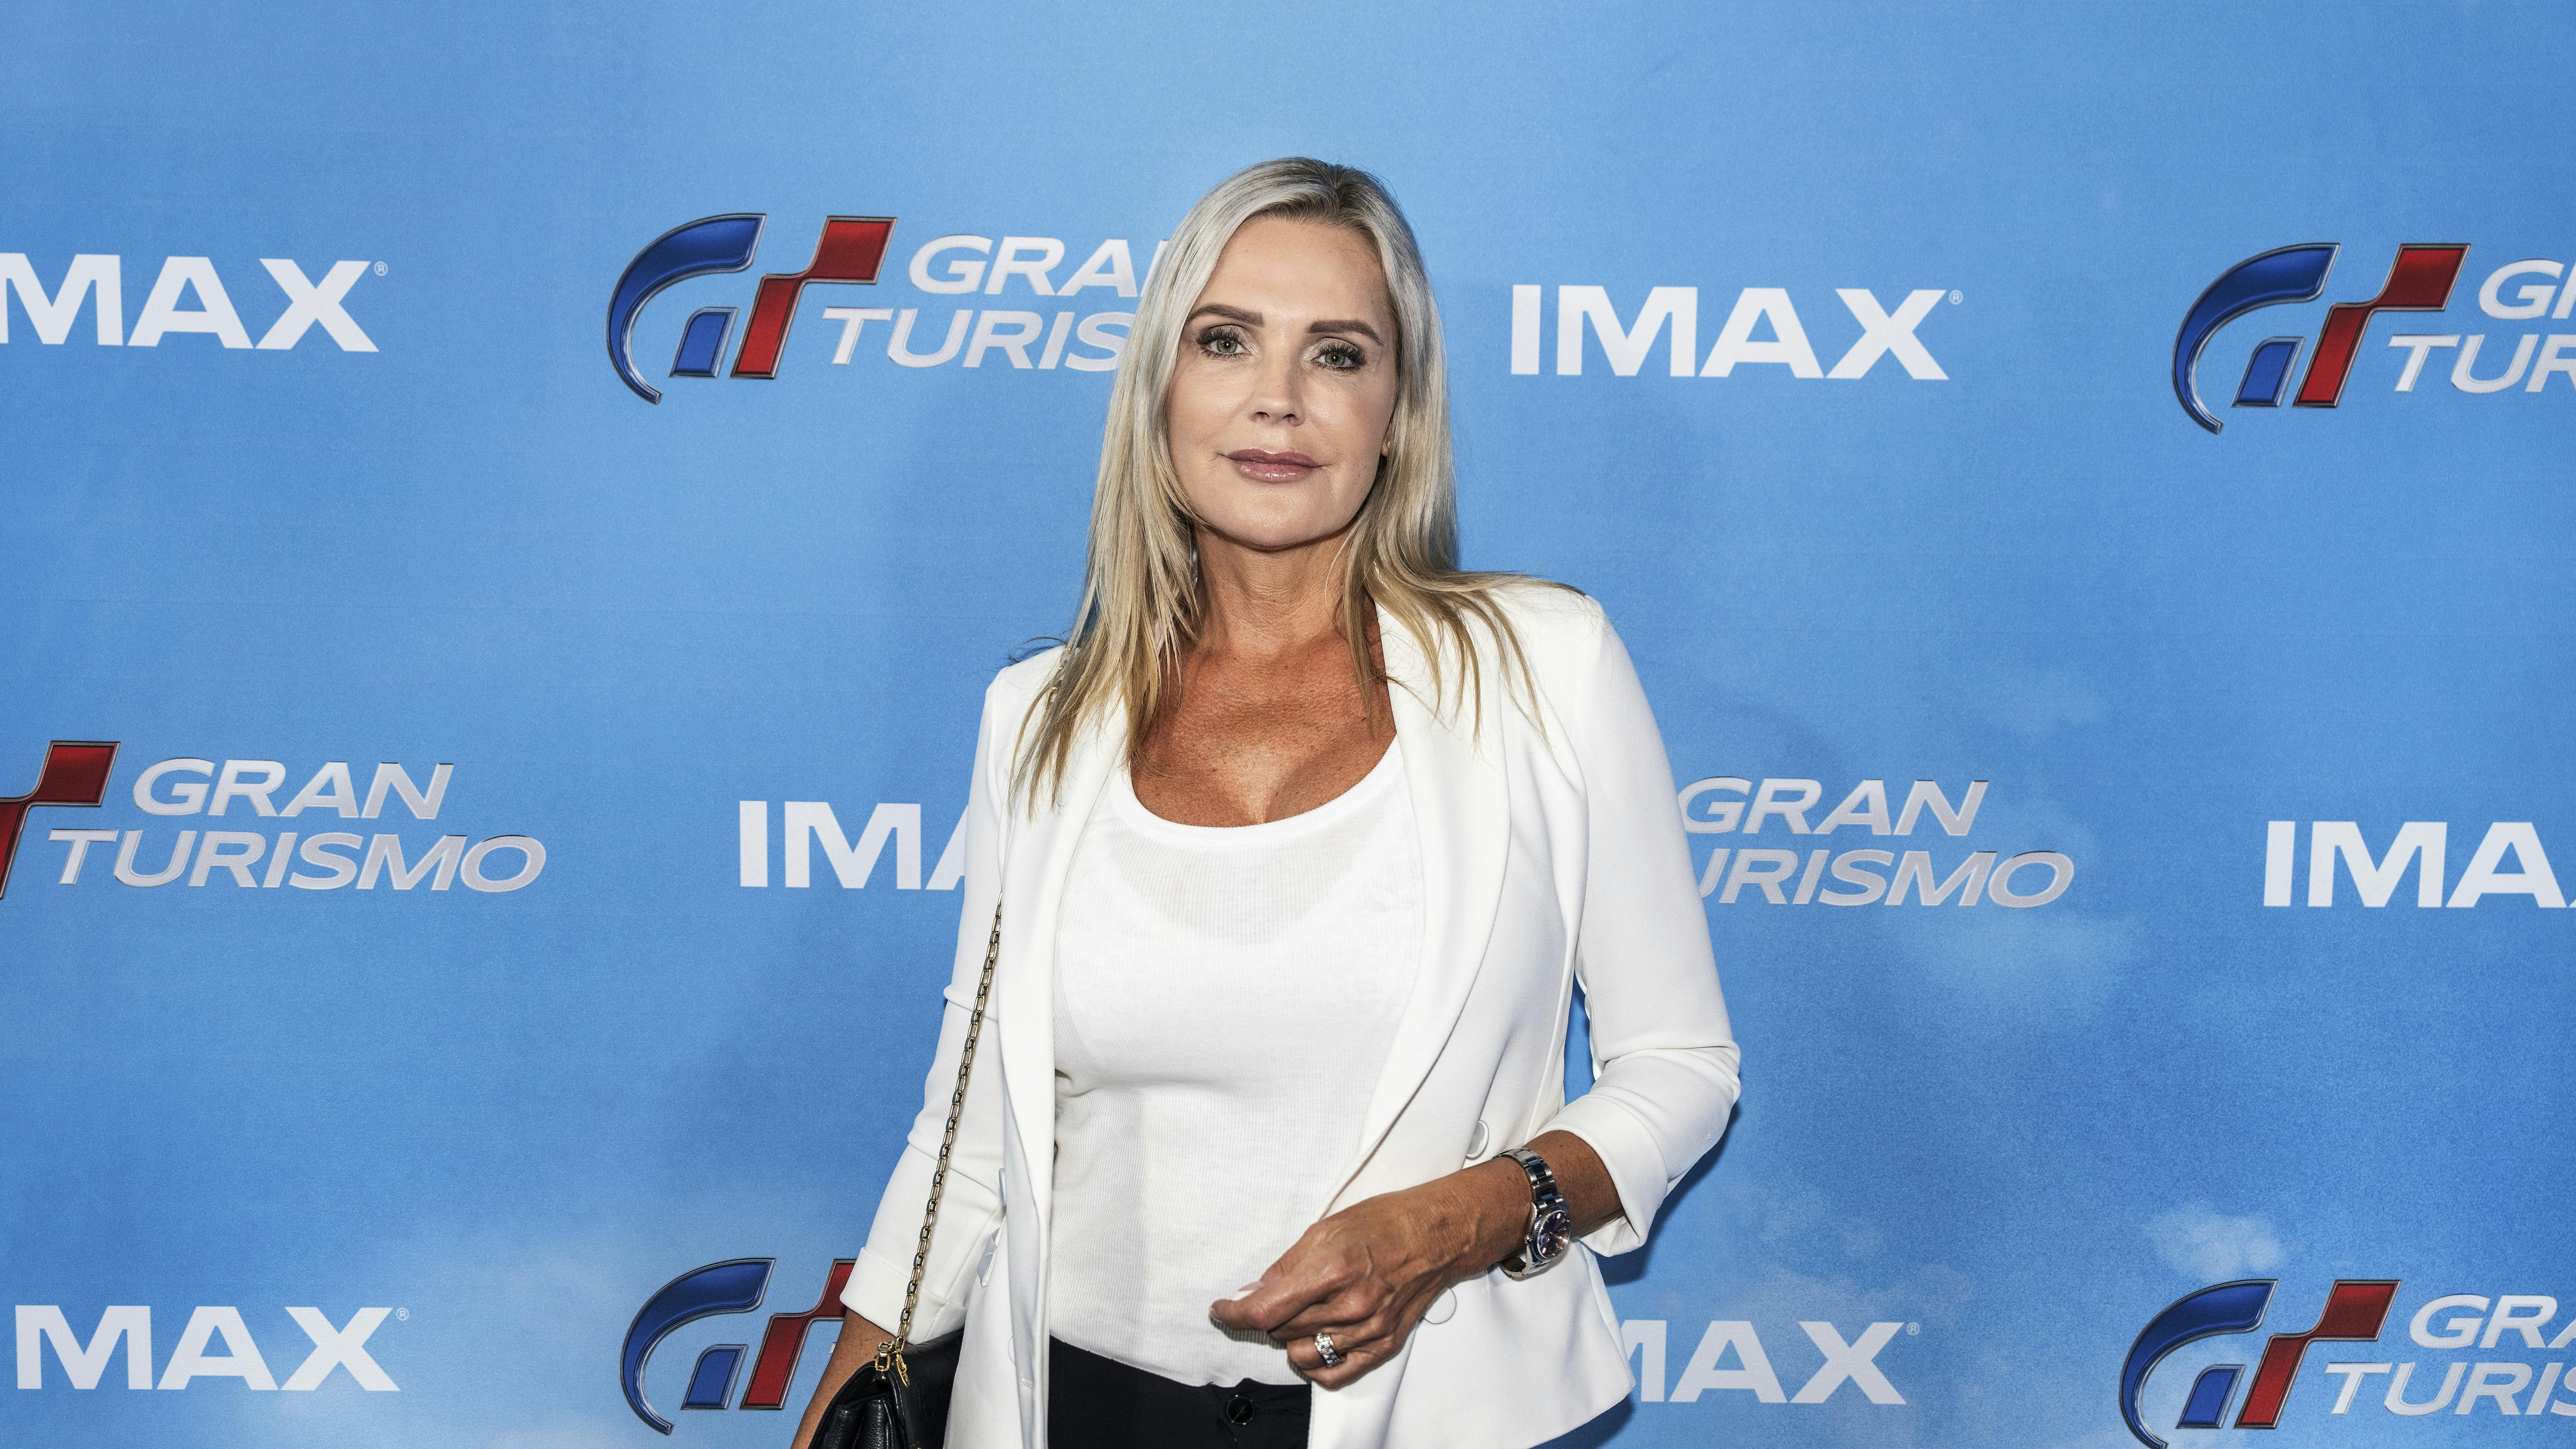 Rød løber på filmen 'Gran Turismo' i CinemaxX på Fisketorvet. Janni Ree. Tirsdag den 15. august 2023.